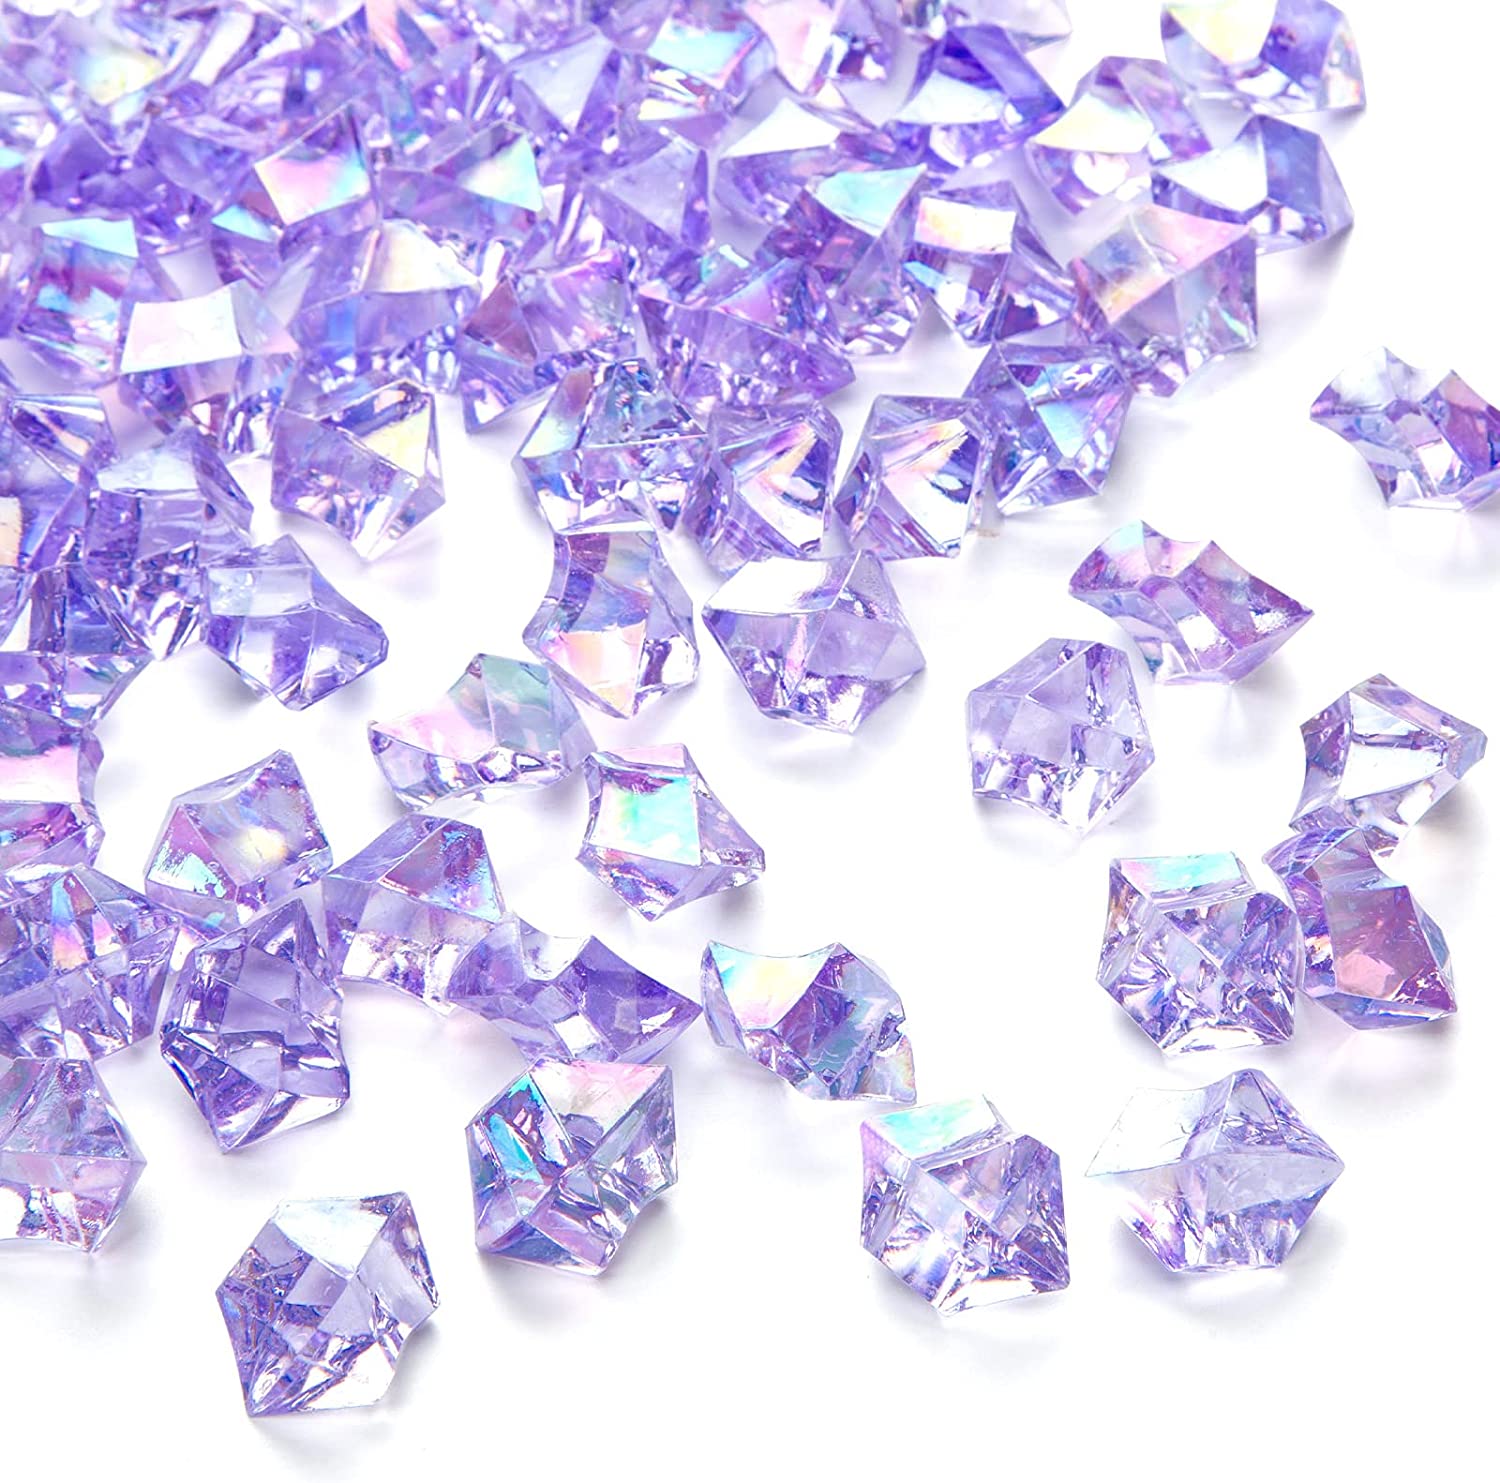 HANSGO Fake Crystals, 500PCS Mini Clear Glass Diamonds Rhinestones Fake  Diamond Fake Ice Plastic Diamonds Vase Rocks Centerpiece for Vase Fillers